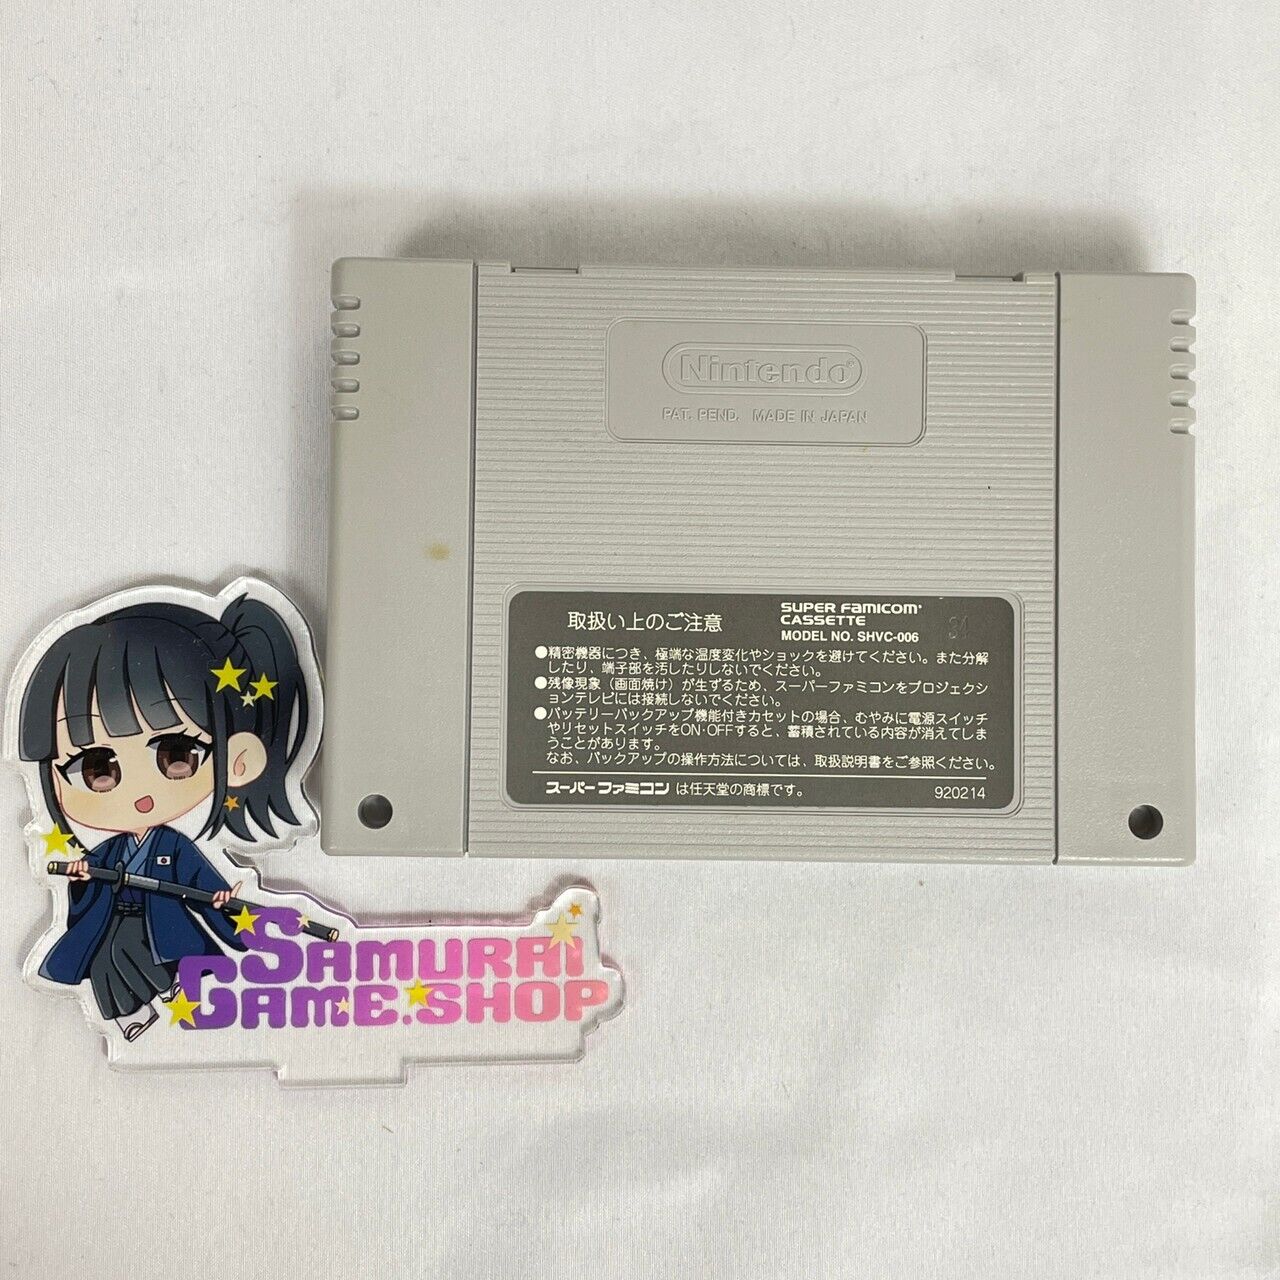 SFC Super Metroid Super Famicom Japanese Edition Nintendo Game Cartridge ONLY